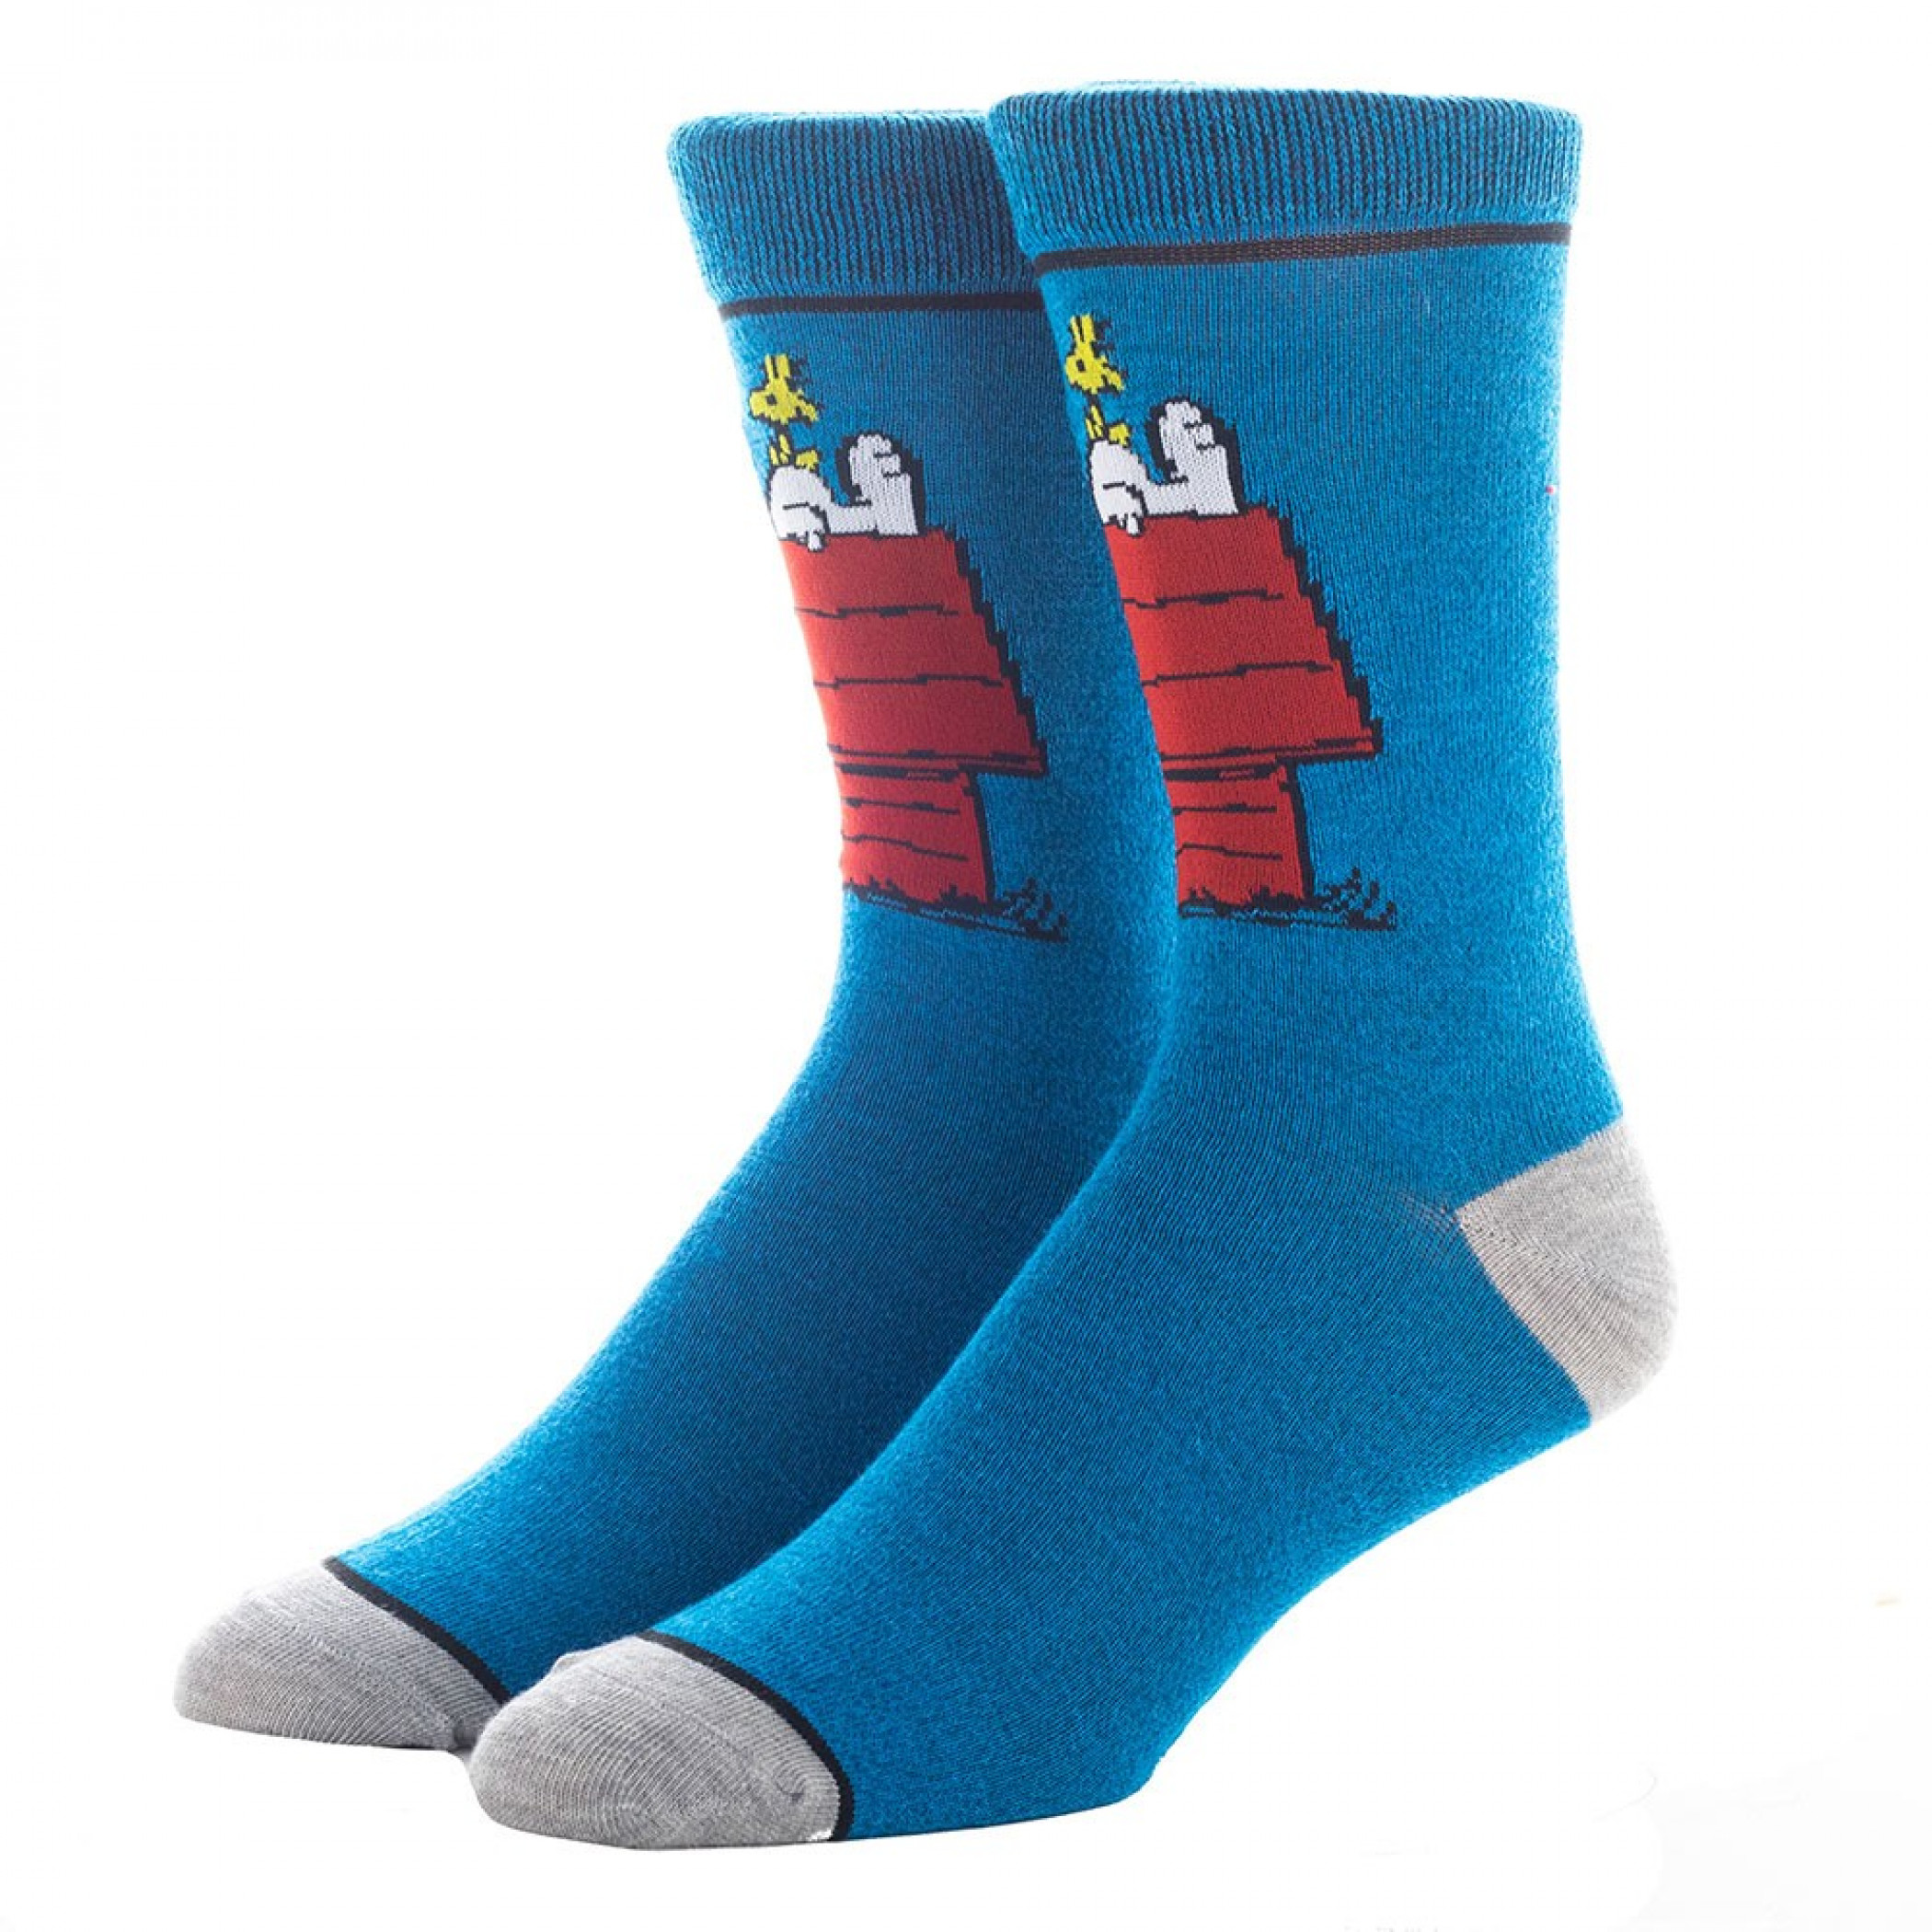 Peanuts 3-Pair Crew Socks Gift Box Set